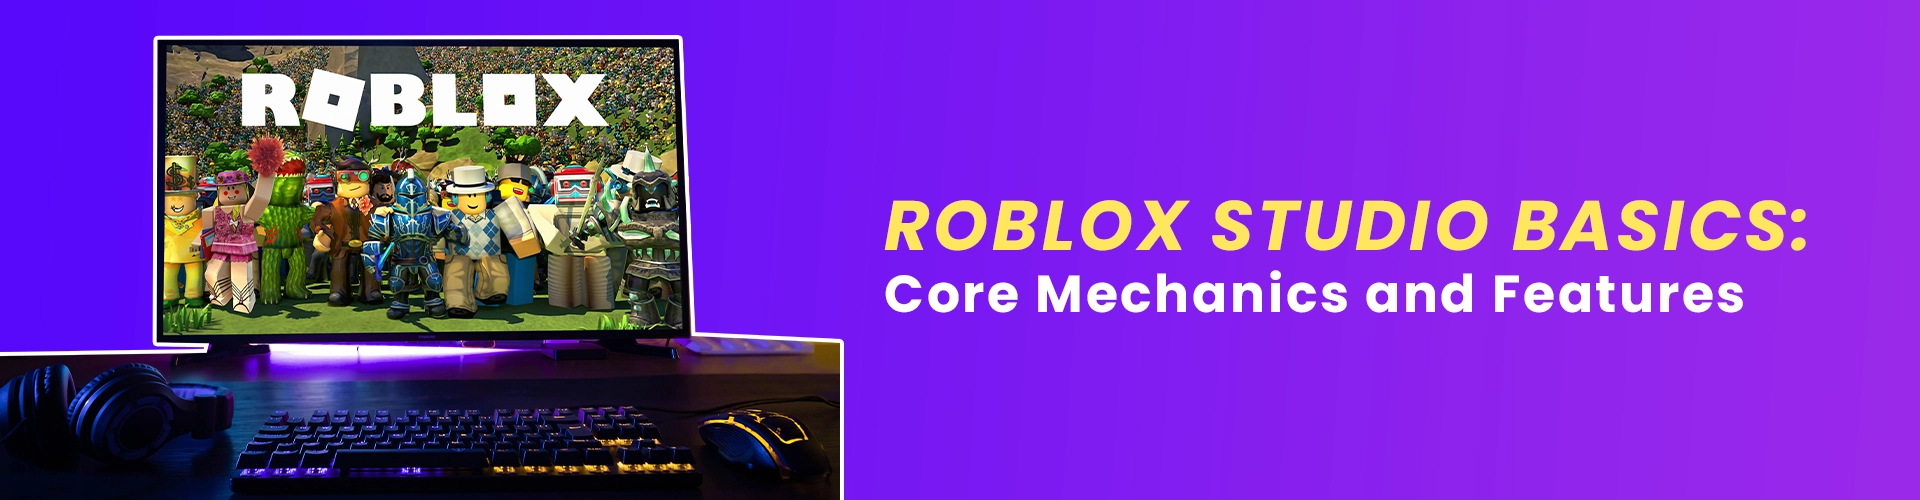 Roblox Studio Basics Guide: Core Mechanics and Features